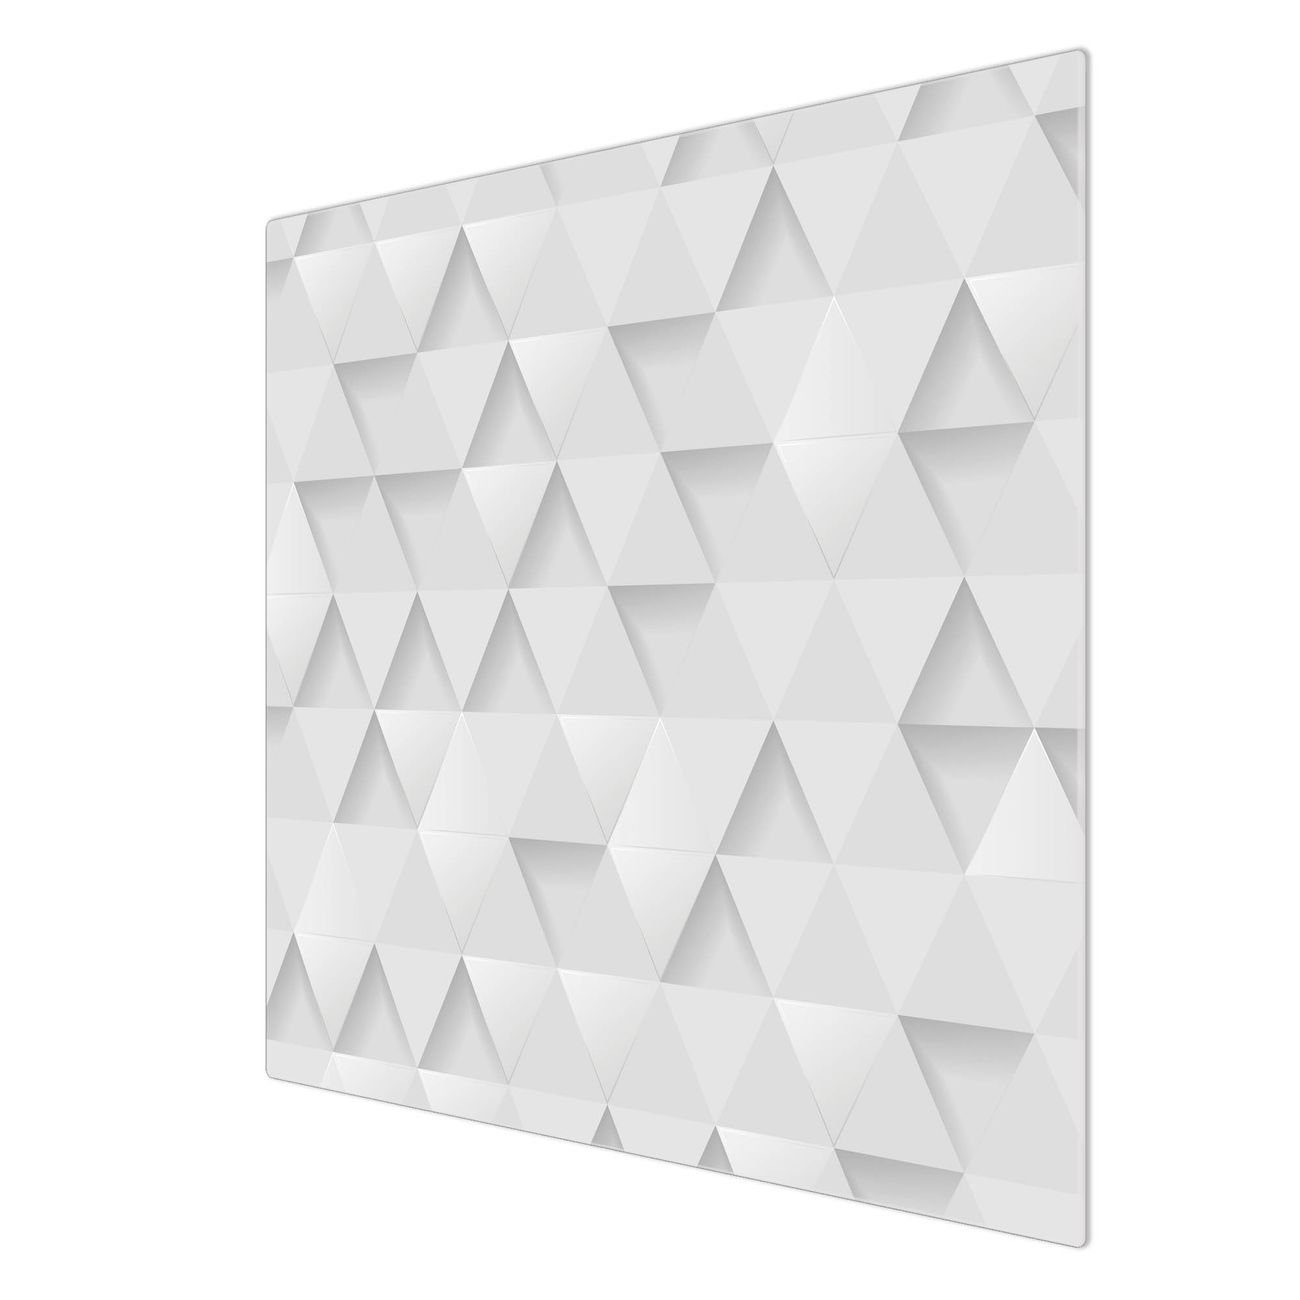 tlg., selbstklebende Weisse Dreiecke, Glas banjado (gehärtet, Gummifüßchen) inkl. 1 Herd-Abdeckplatte